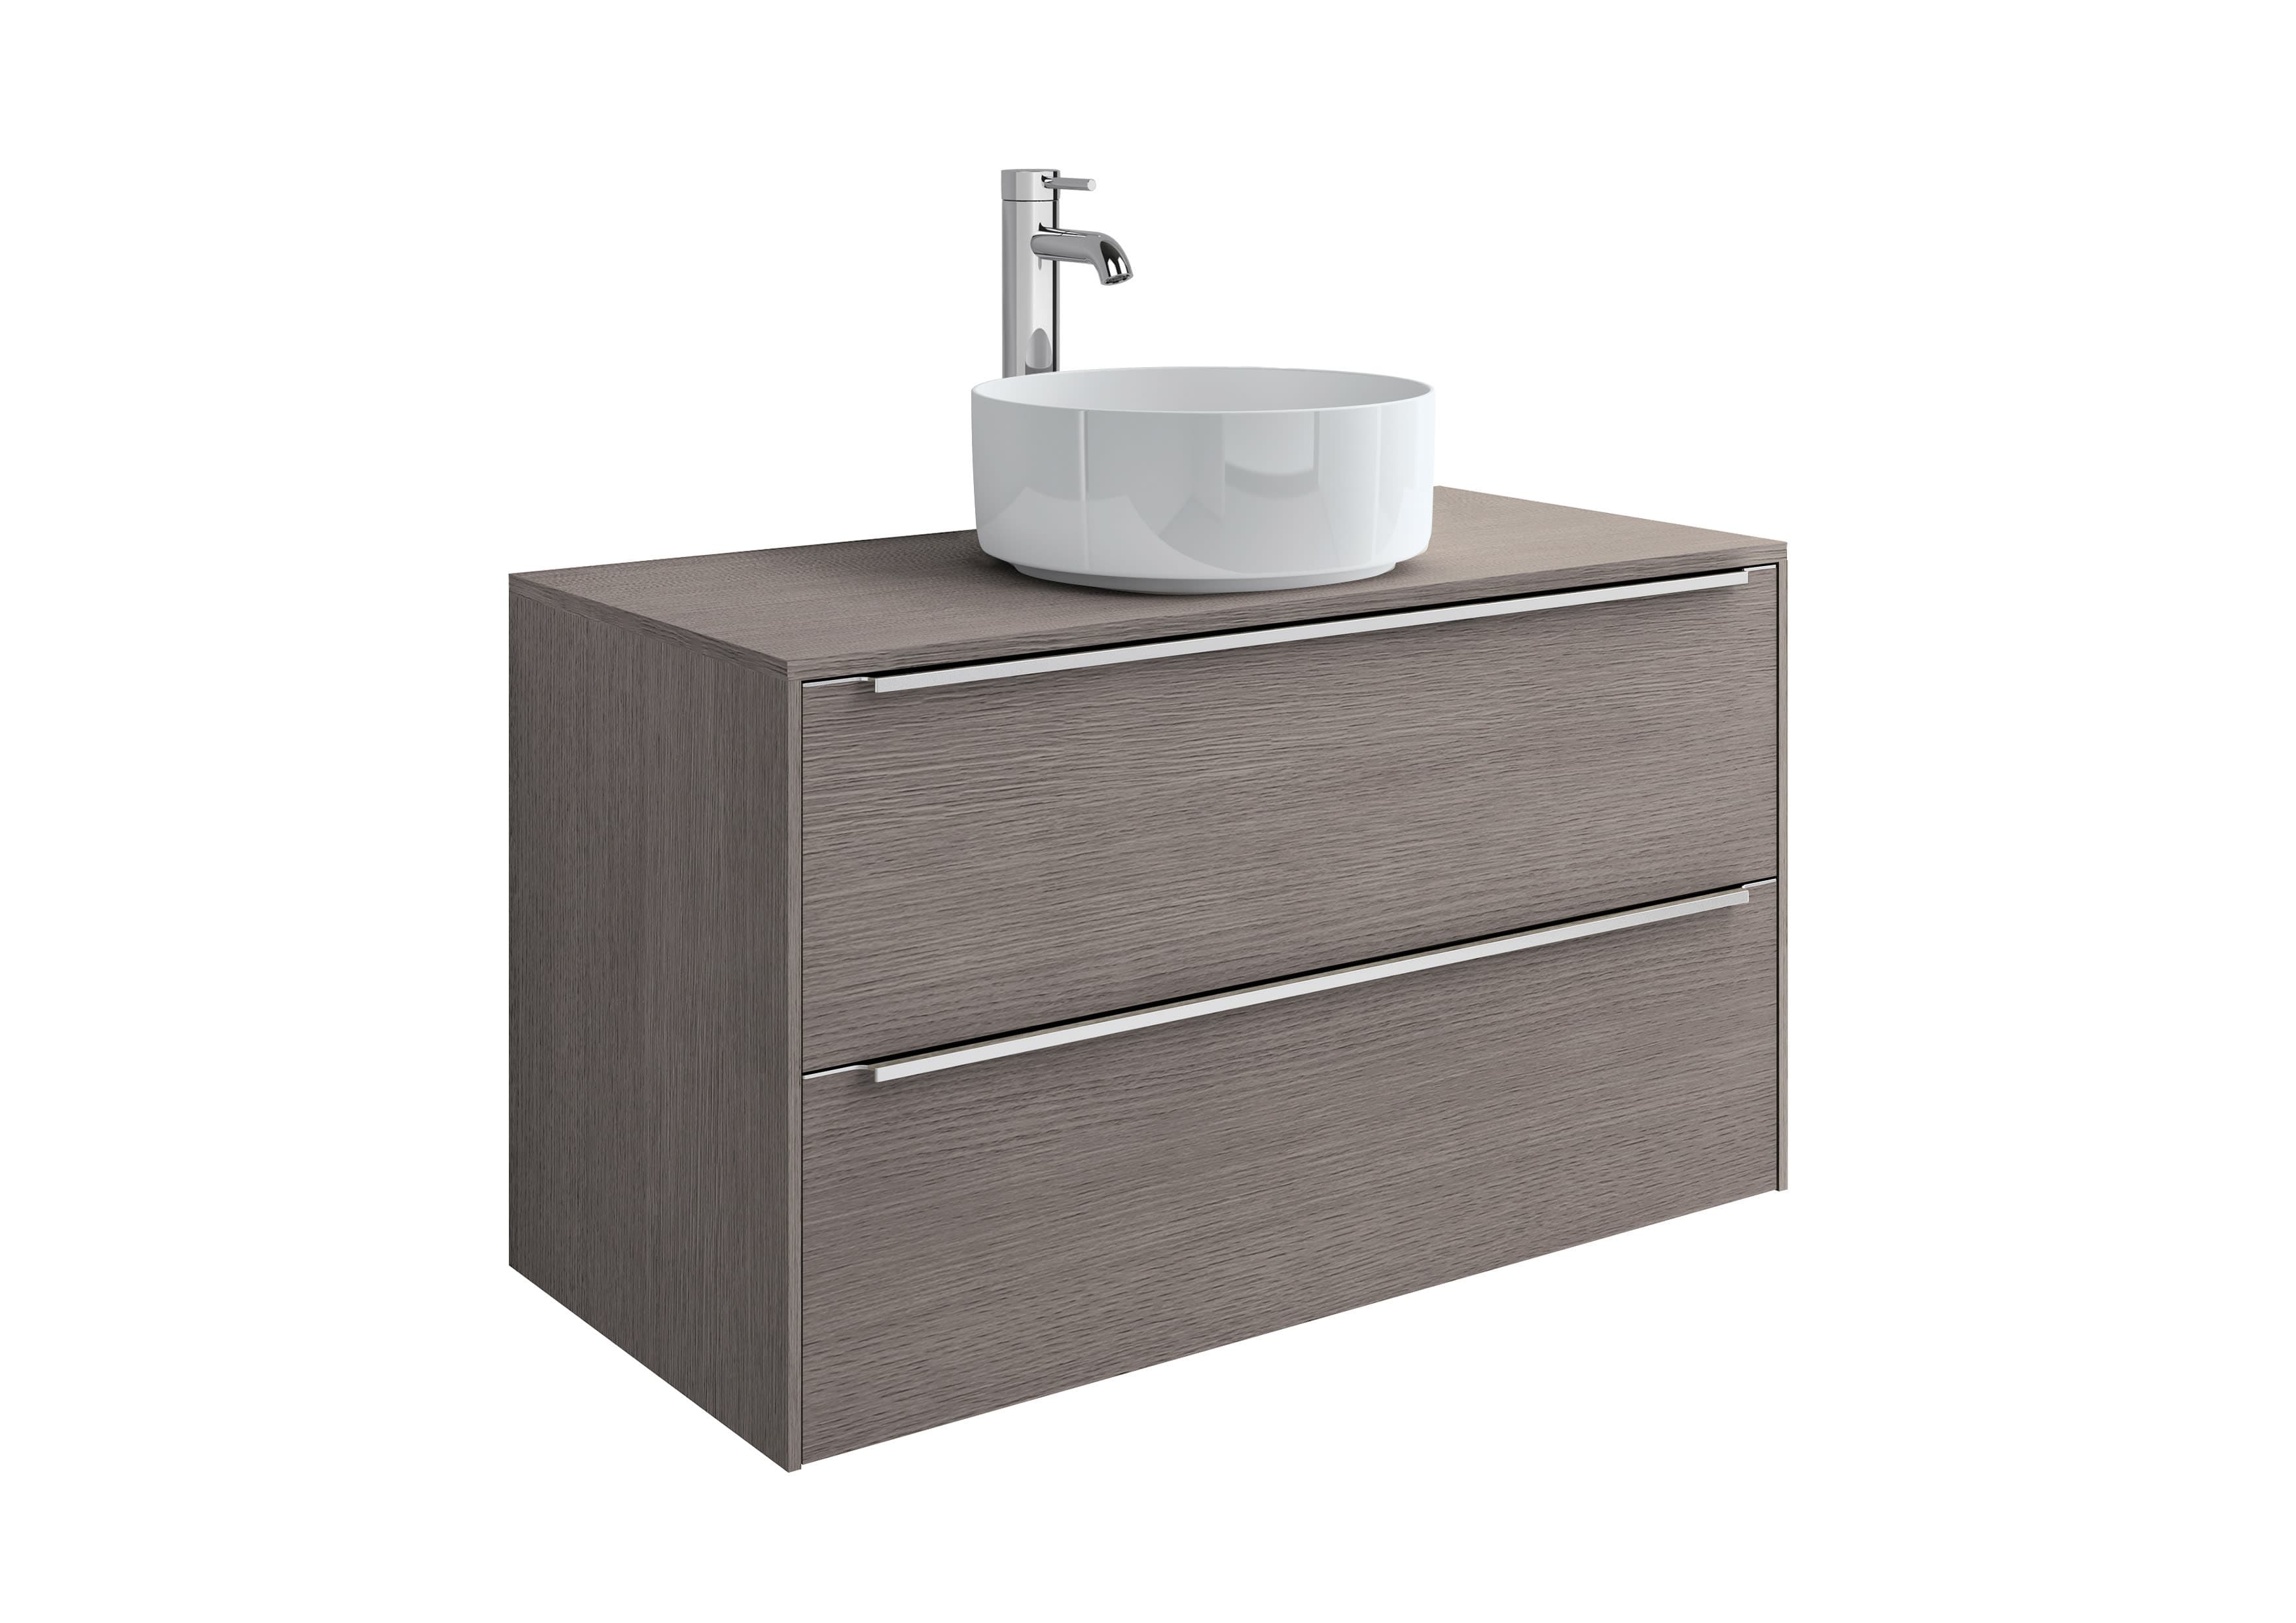 Sanitaire Meubles Salle de bain INSPIRA A851081402 Meuble 2 tiroirs avec plan pour vasque à poser Roca 5 - Mirage ceramica